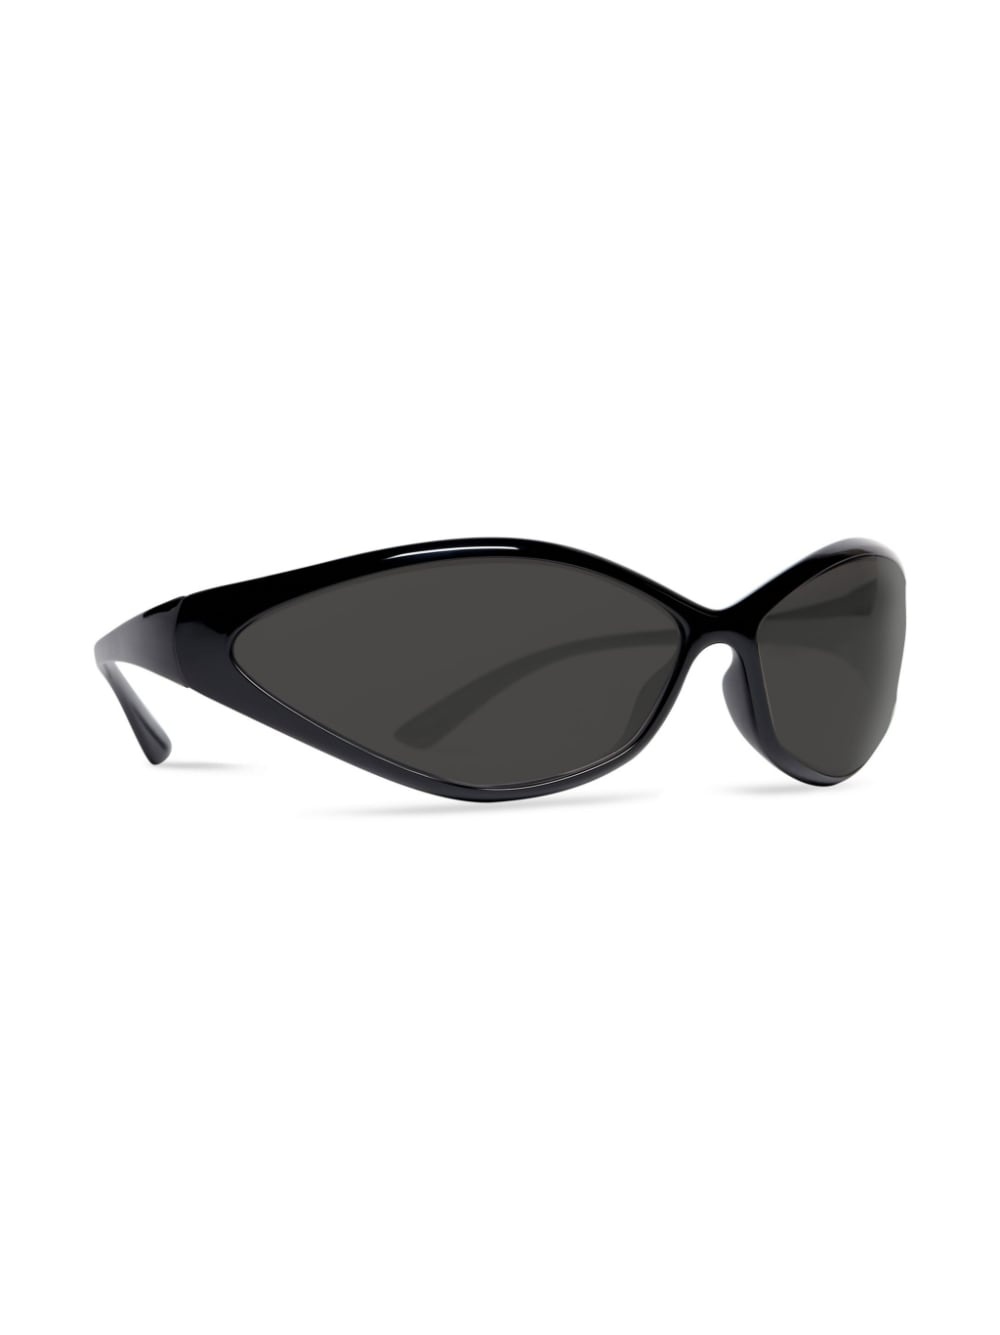 oval-frame sunglasses - 2